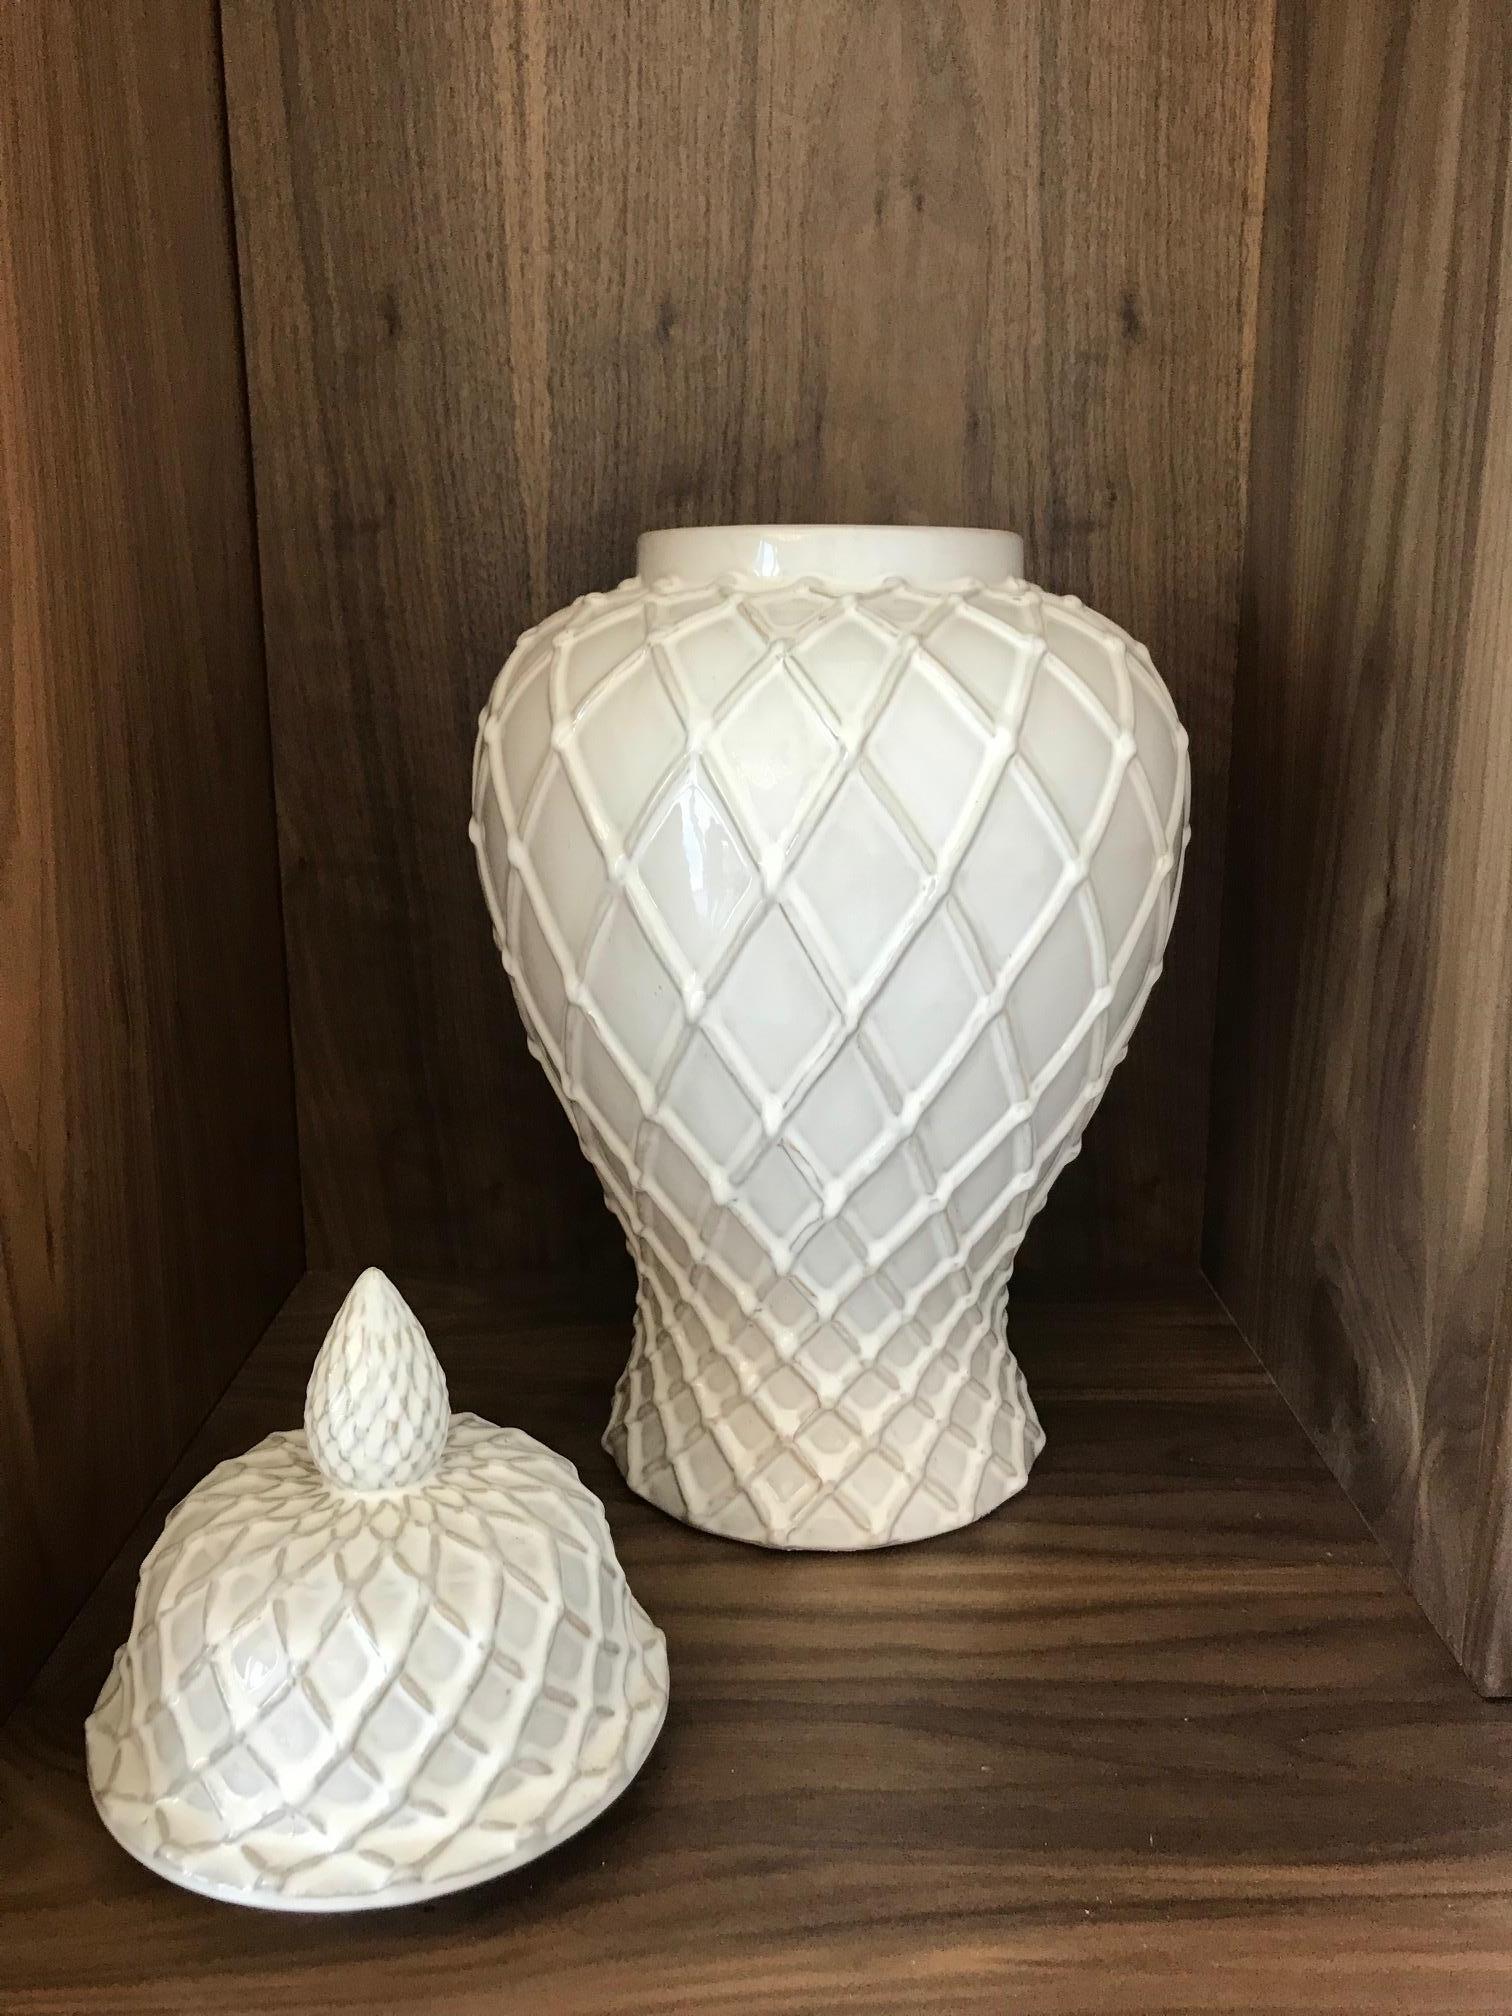 Glazed Exquisite White Ceramic Lidded Urn Vase with Lattice Design, Italy